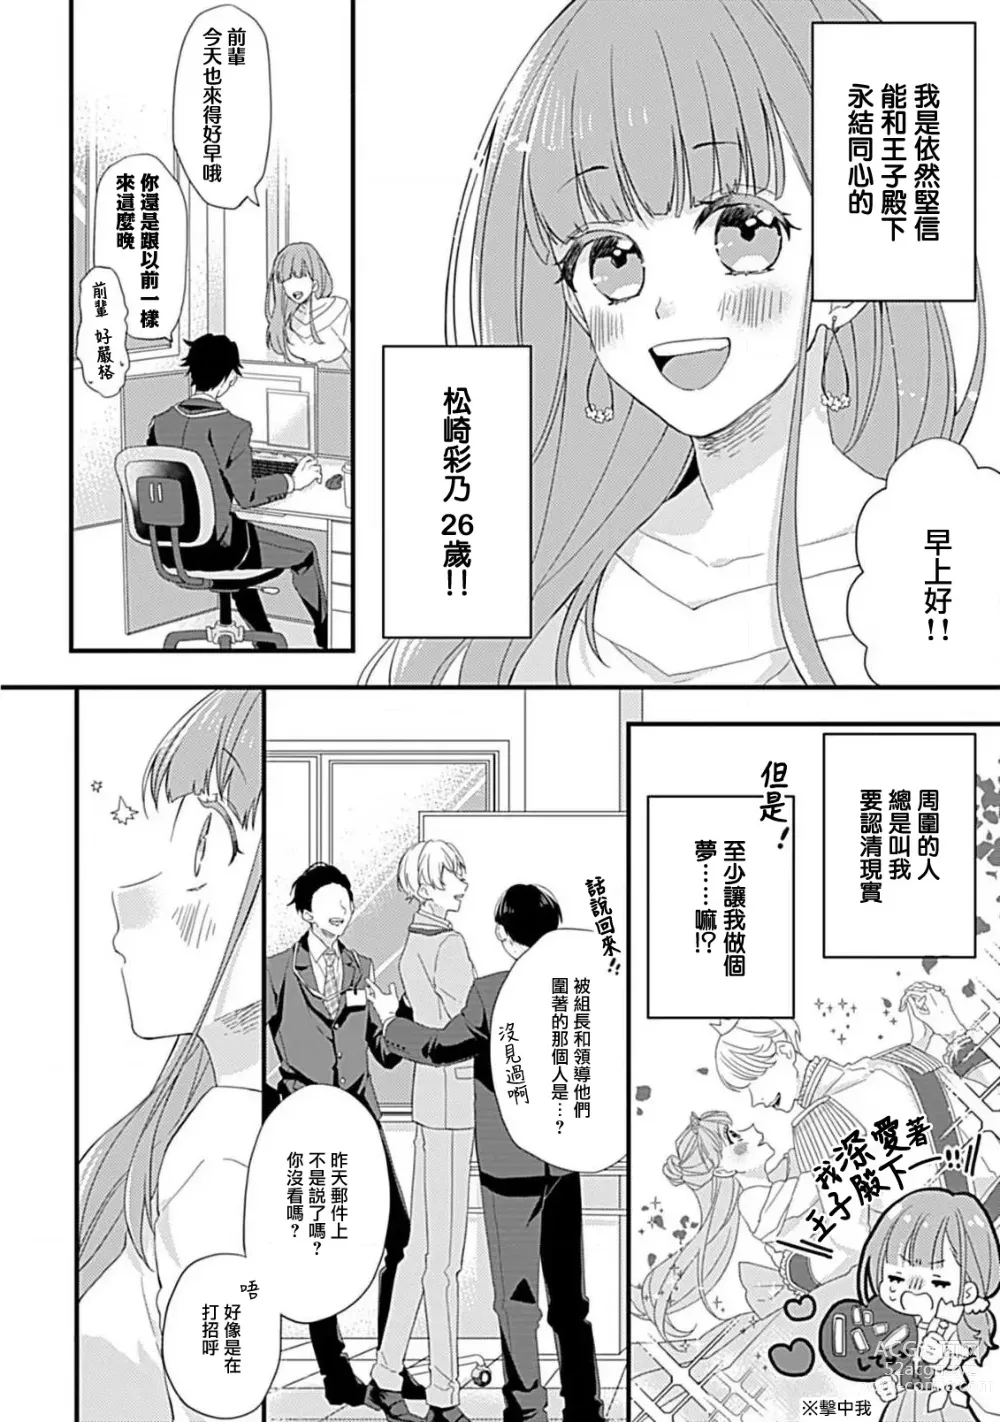 Page 3 of manga 辛德瑞拉综合征与溺爱王子